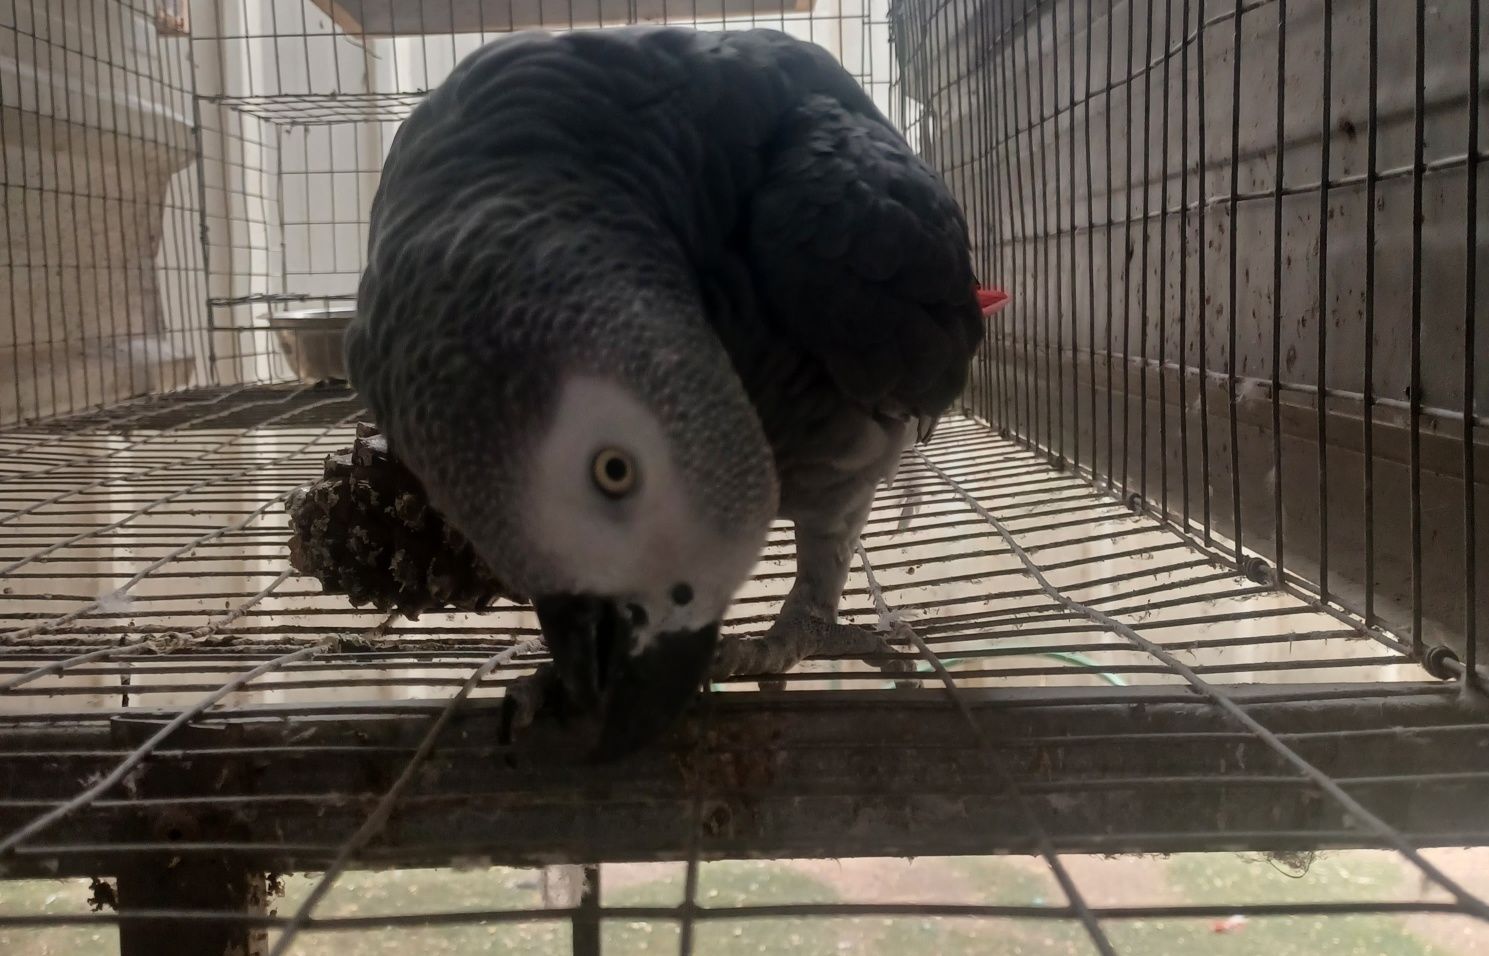 Papagaio cinzento